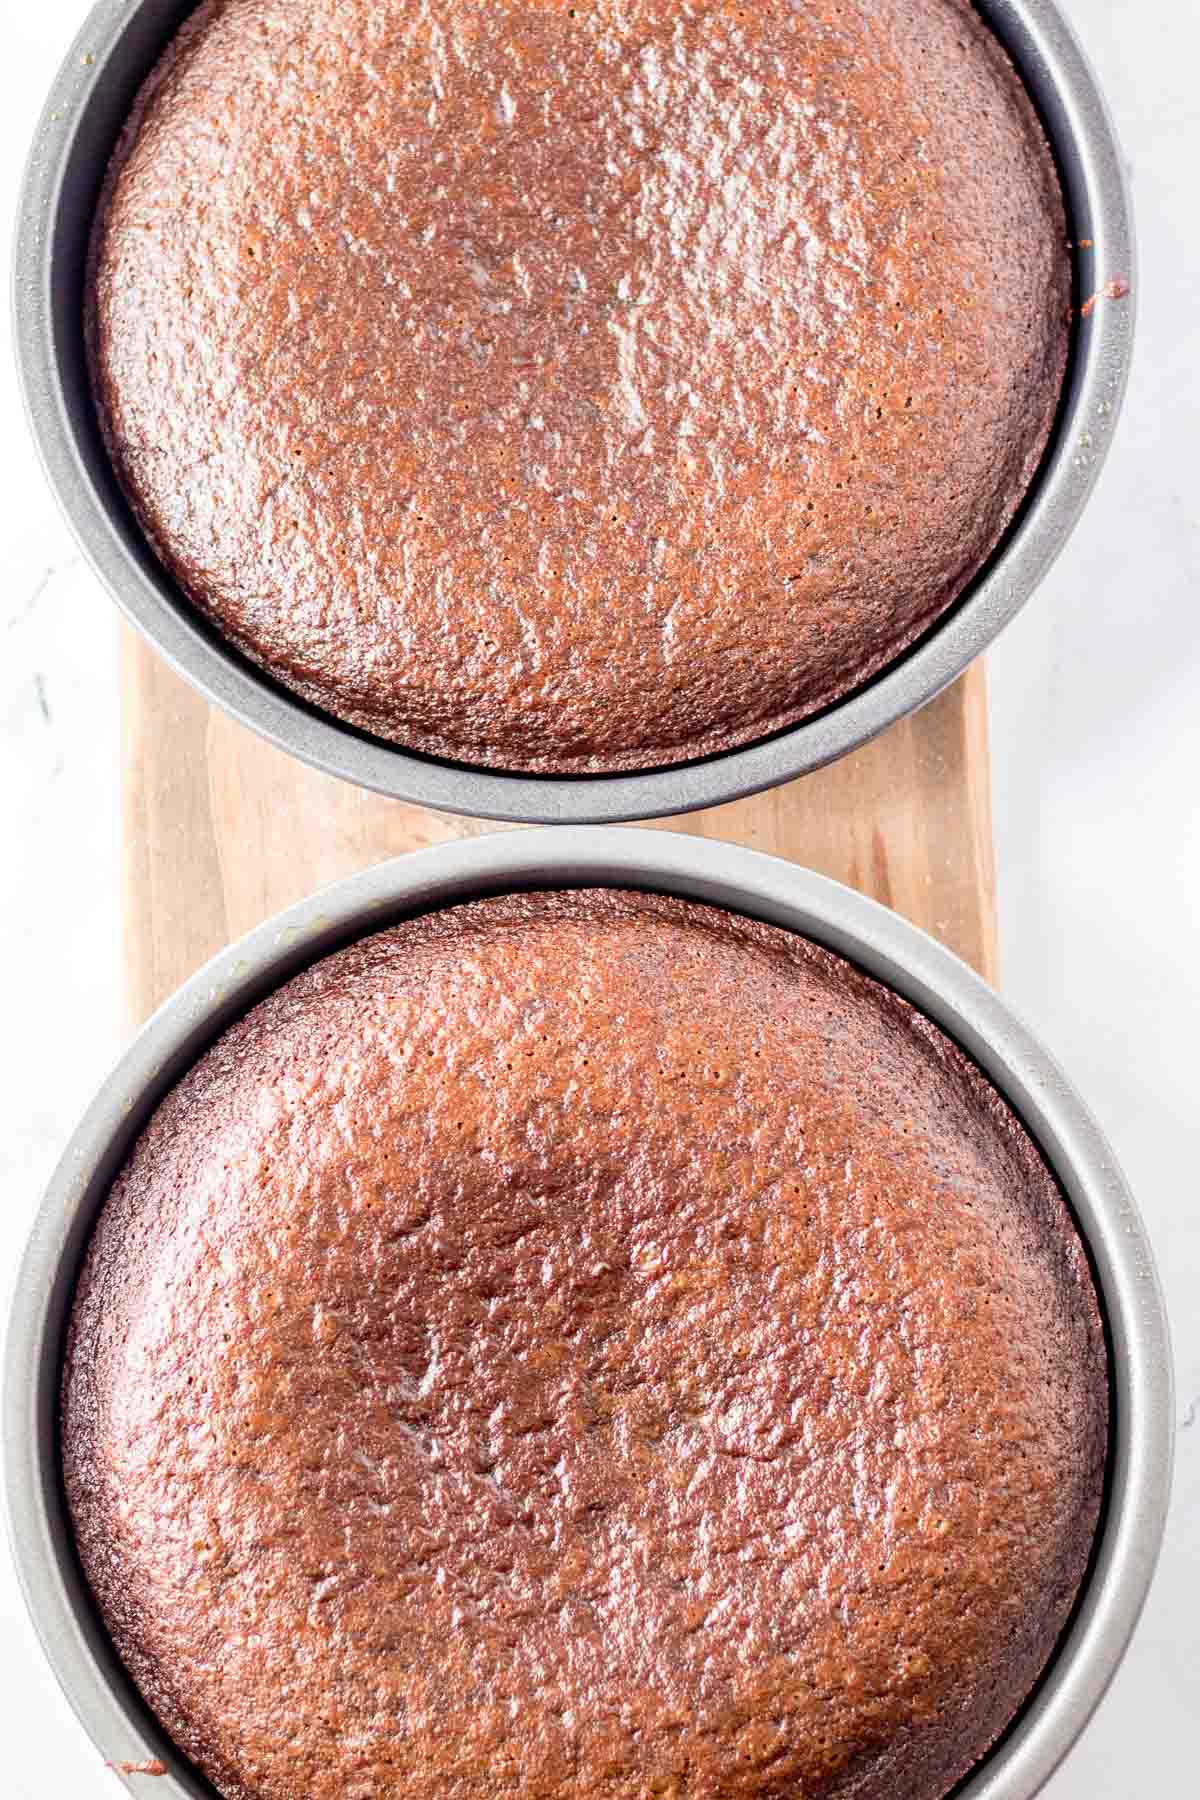 chocolate cakes in metal baking pans